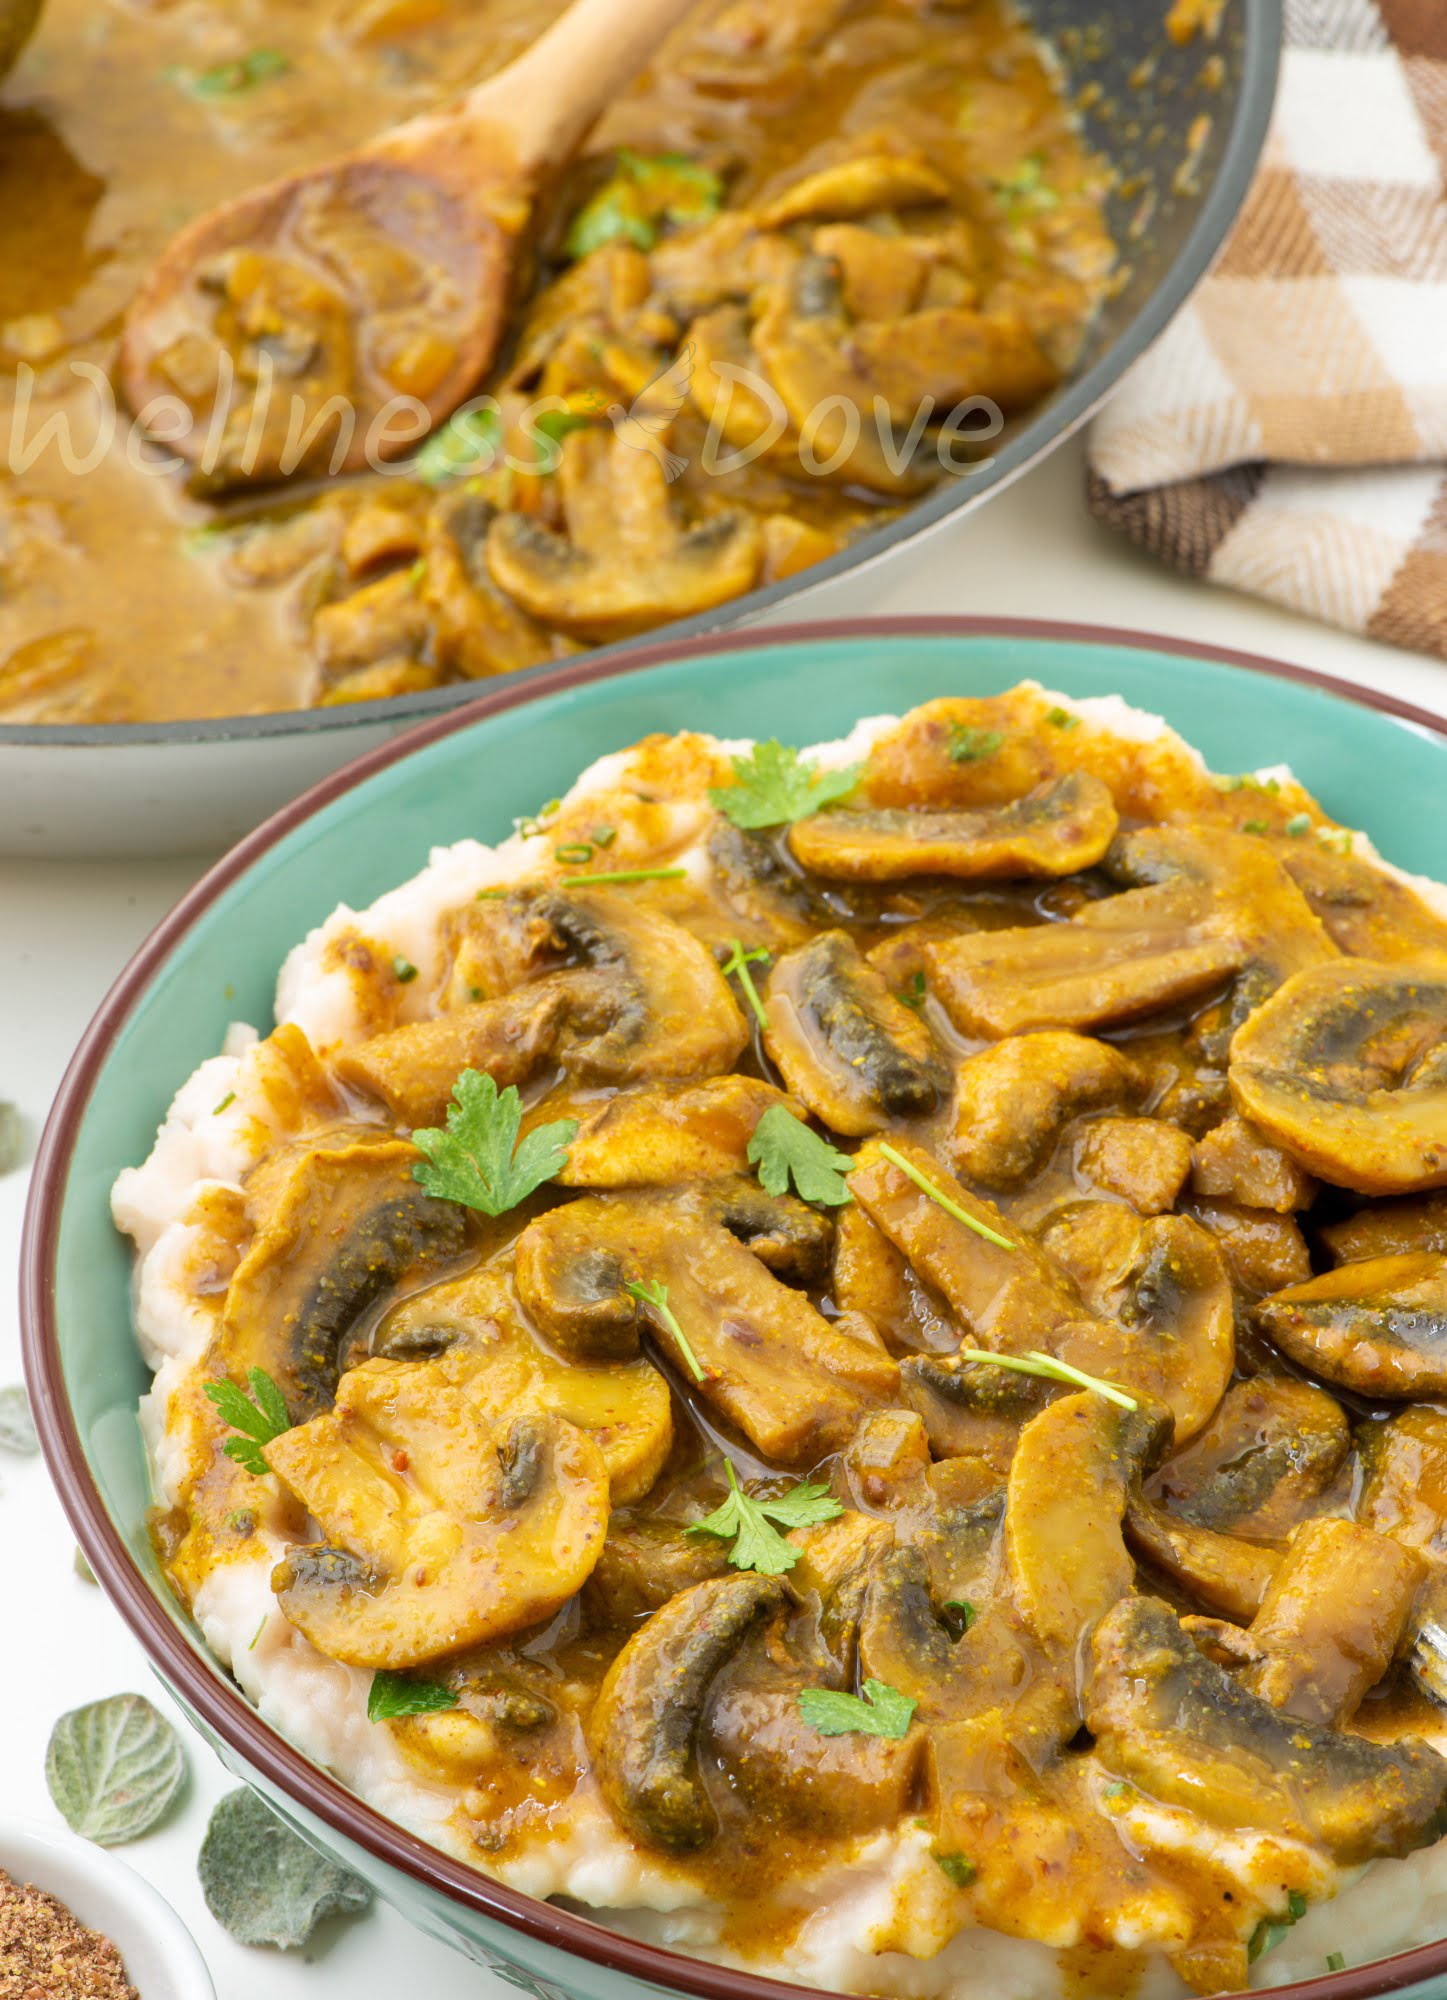 Easy Curry Mushrooms Over White Bean Mash | WellnessDove